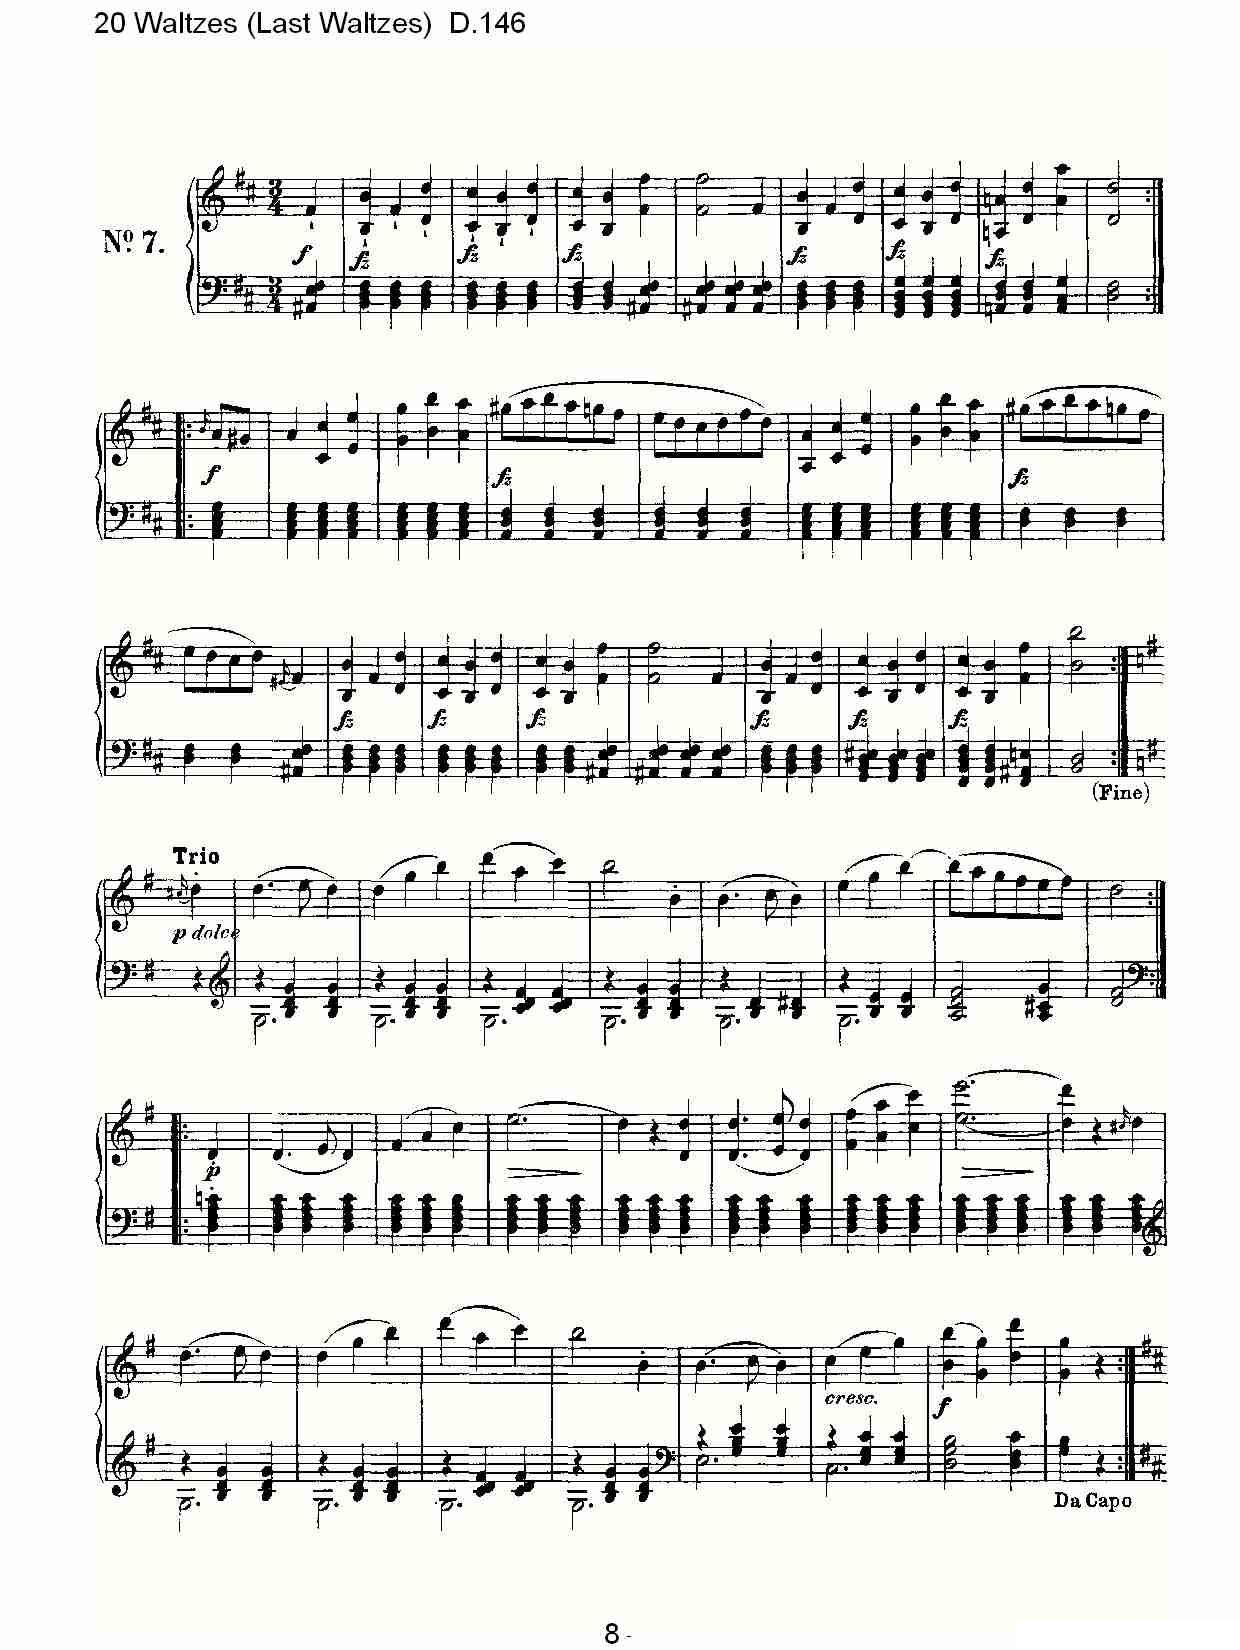 20 Waltzes（Last Waltzes) D.14）钢琴曲谱（图8）